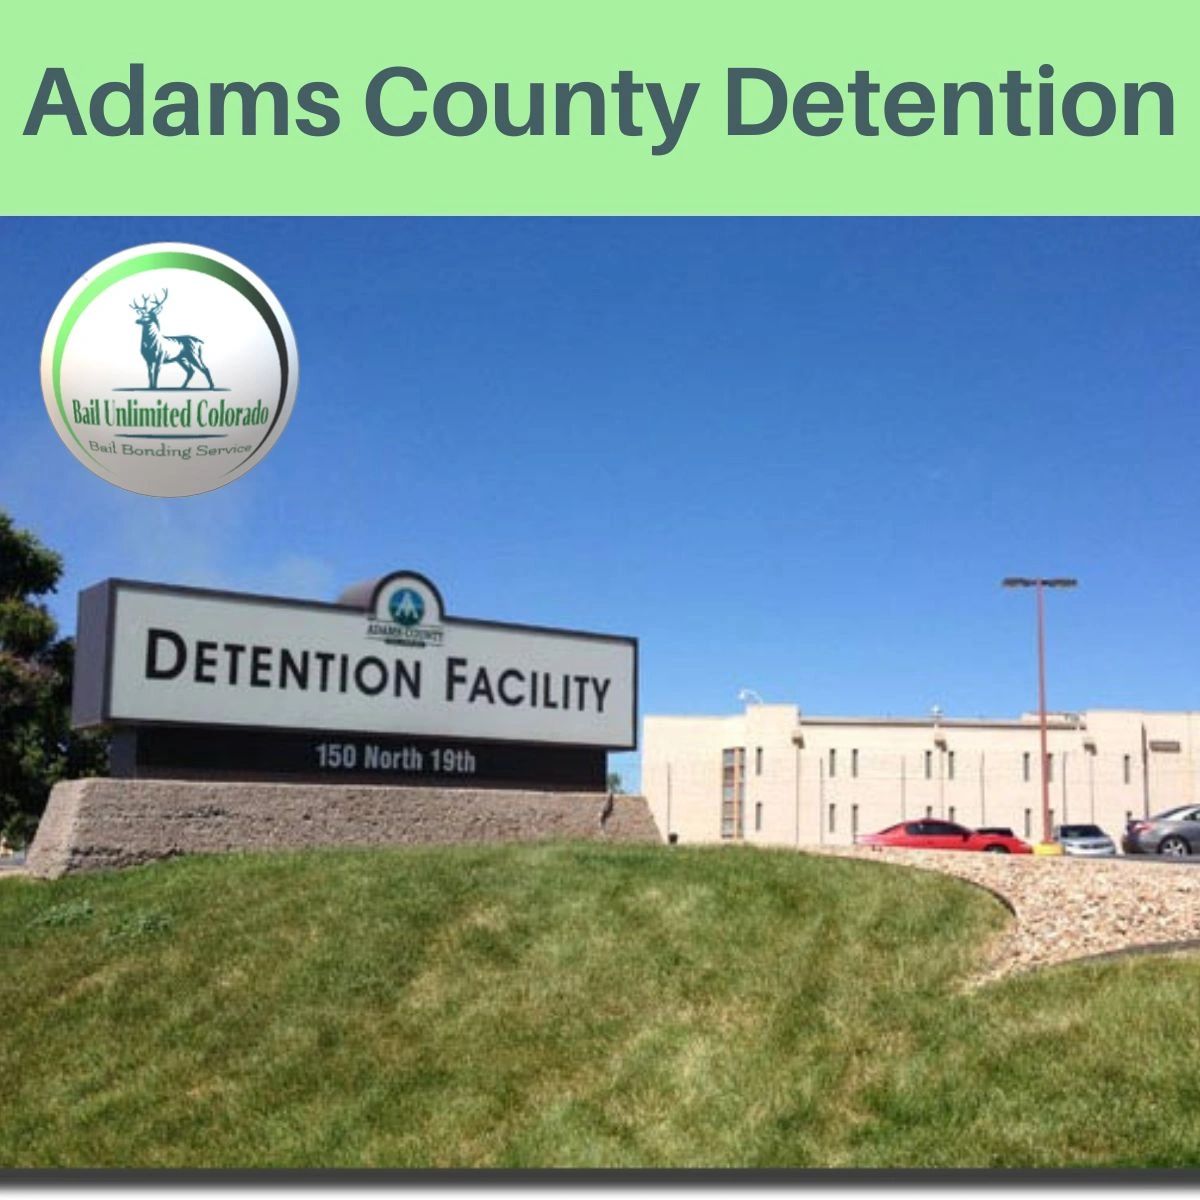 Adams County Detention Facility Jail Brighton CO LOGO Bail Unlimited Colorado Bail Bonding Service